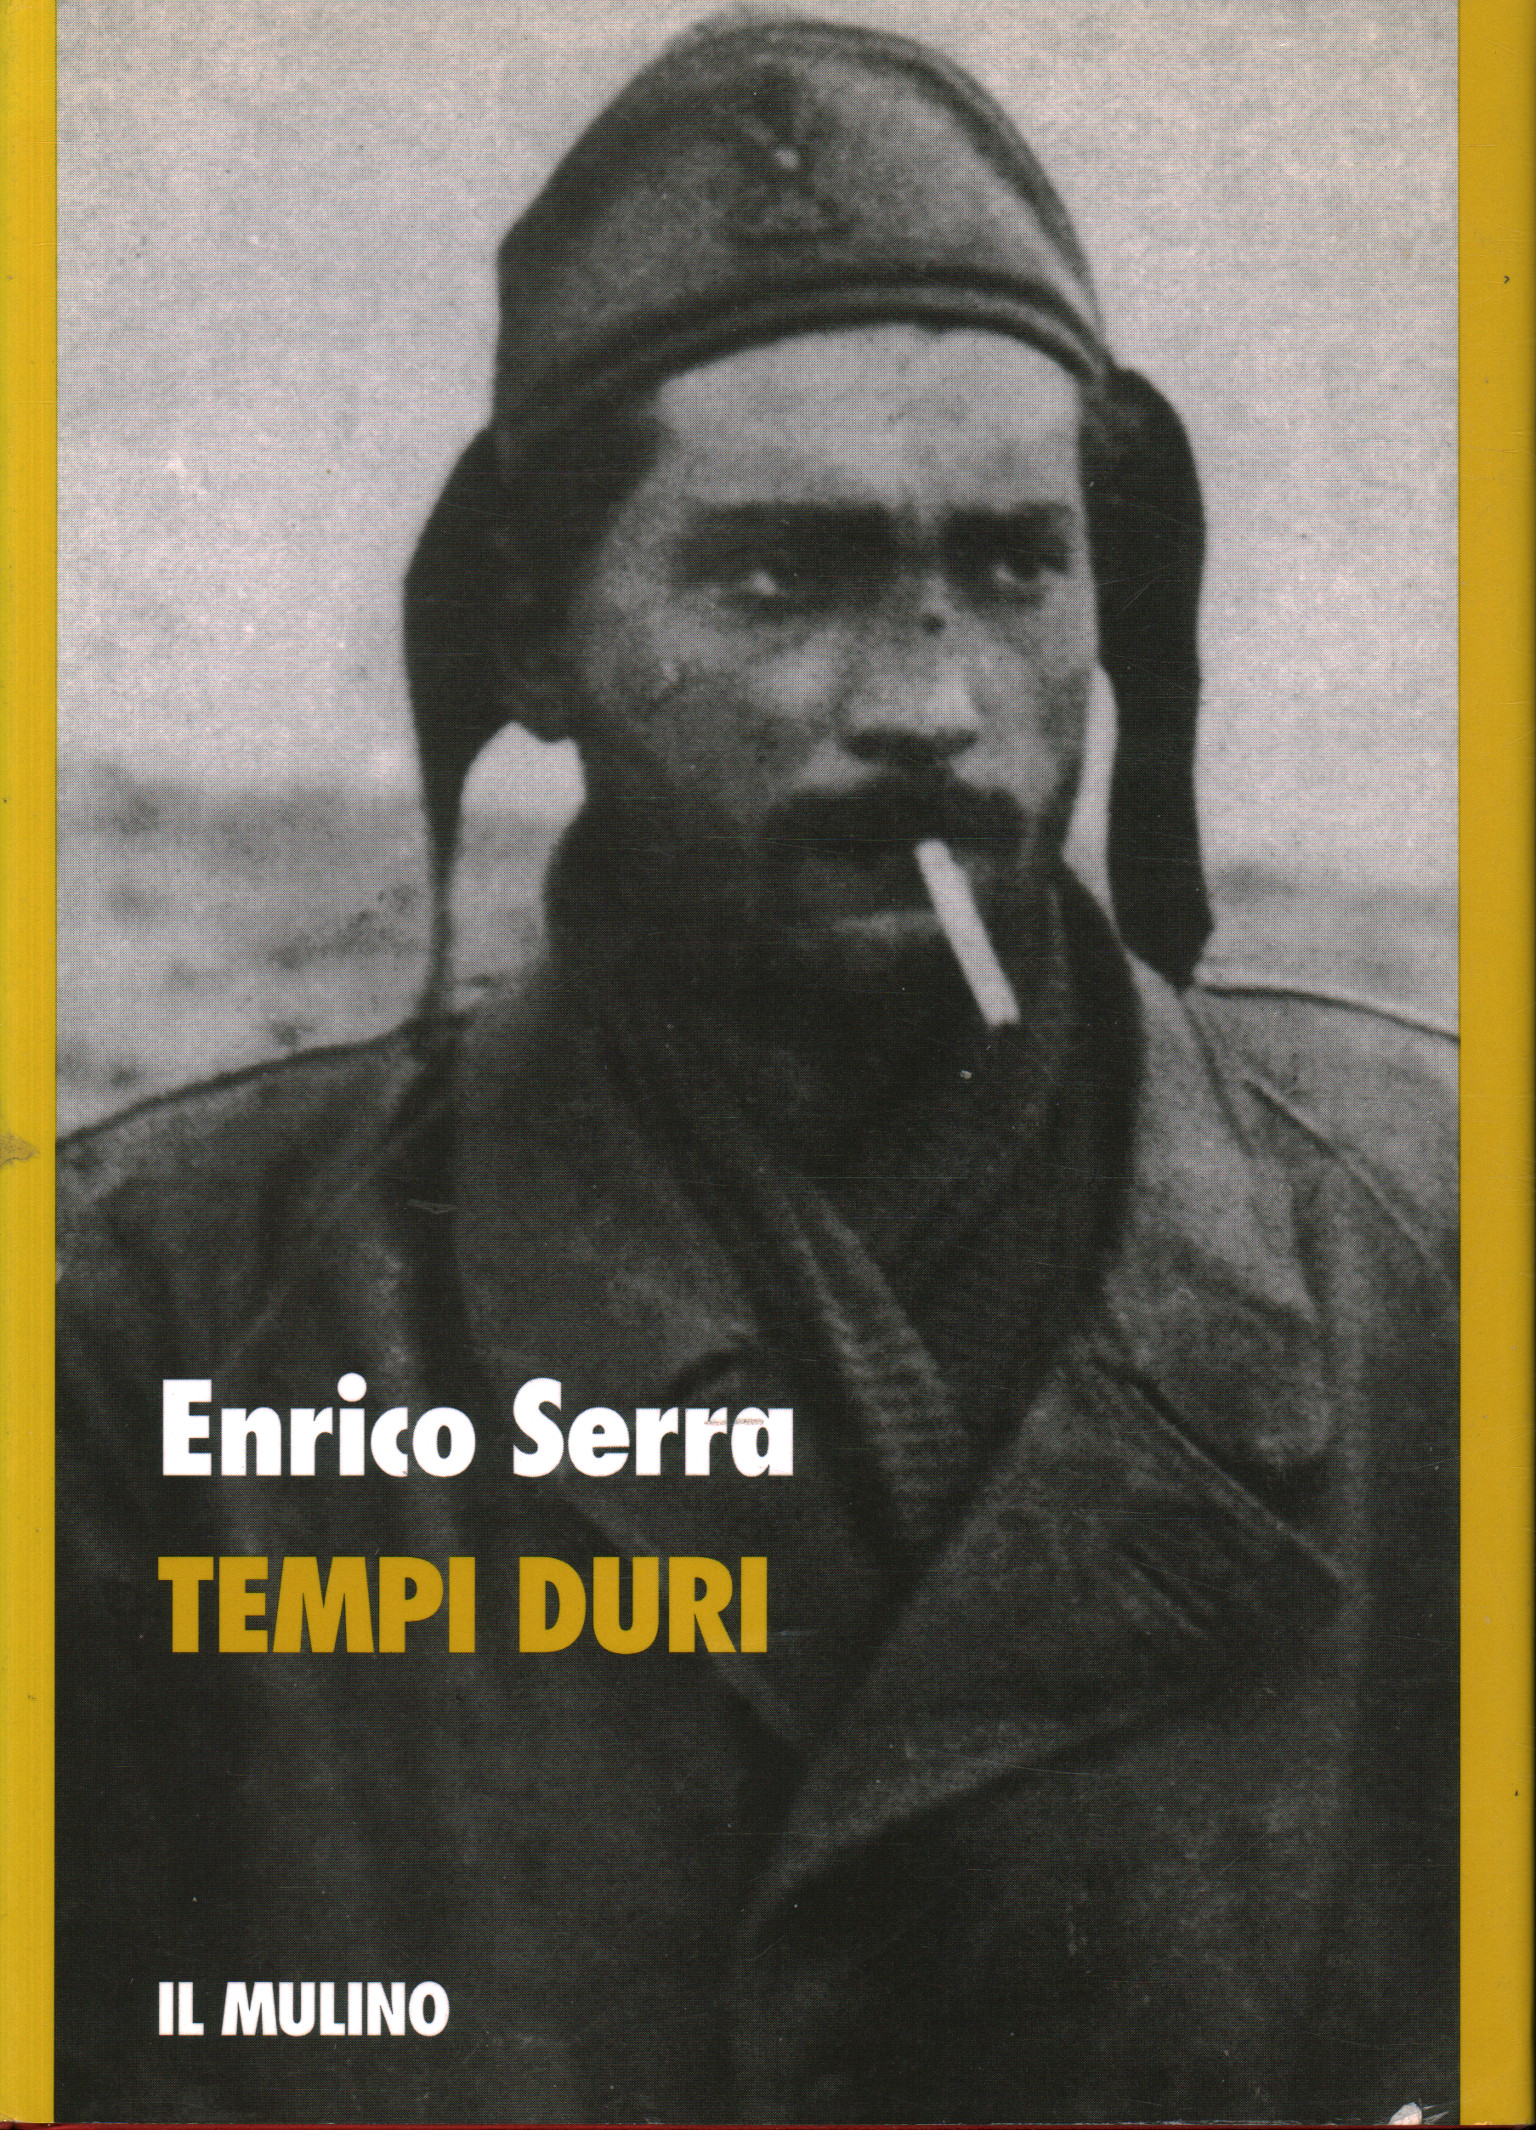 Hard times, Enrico Serra